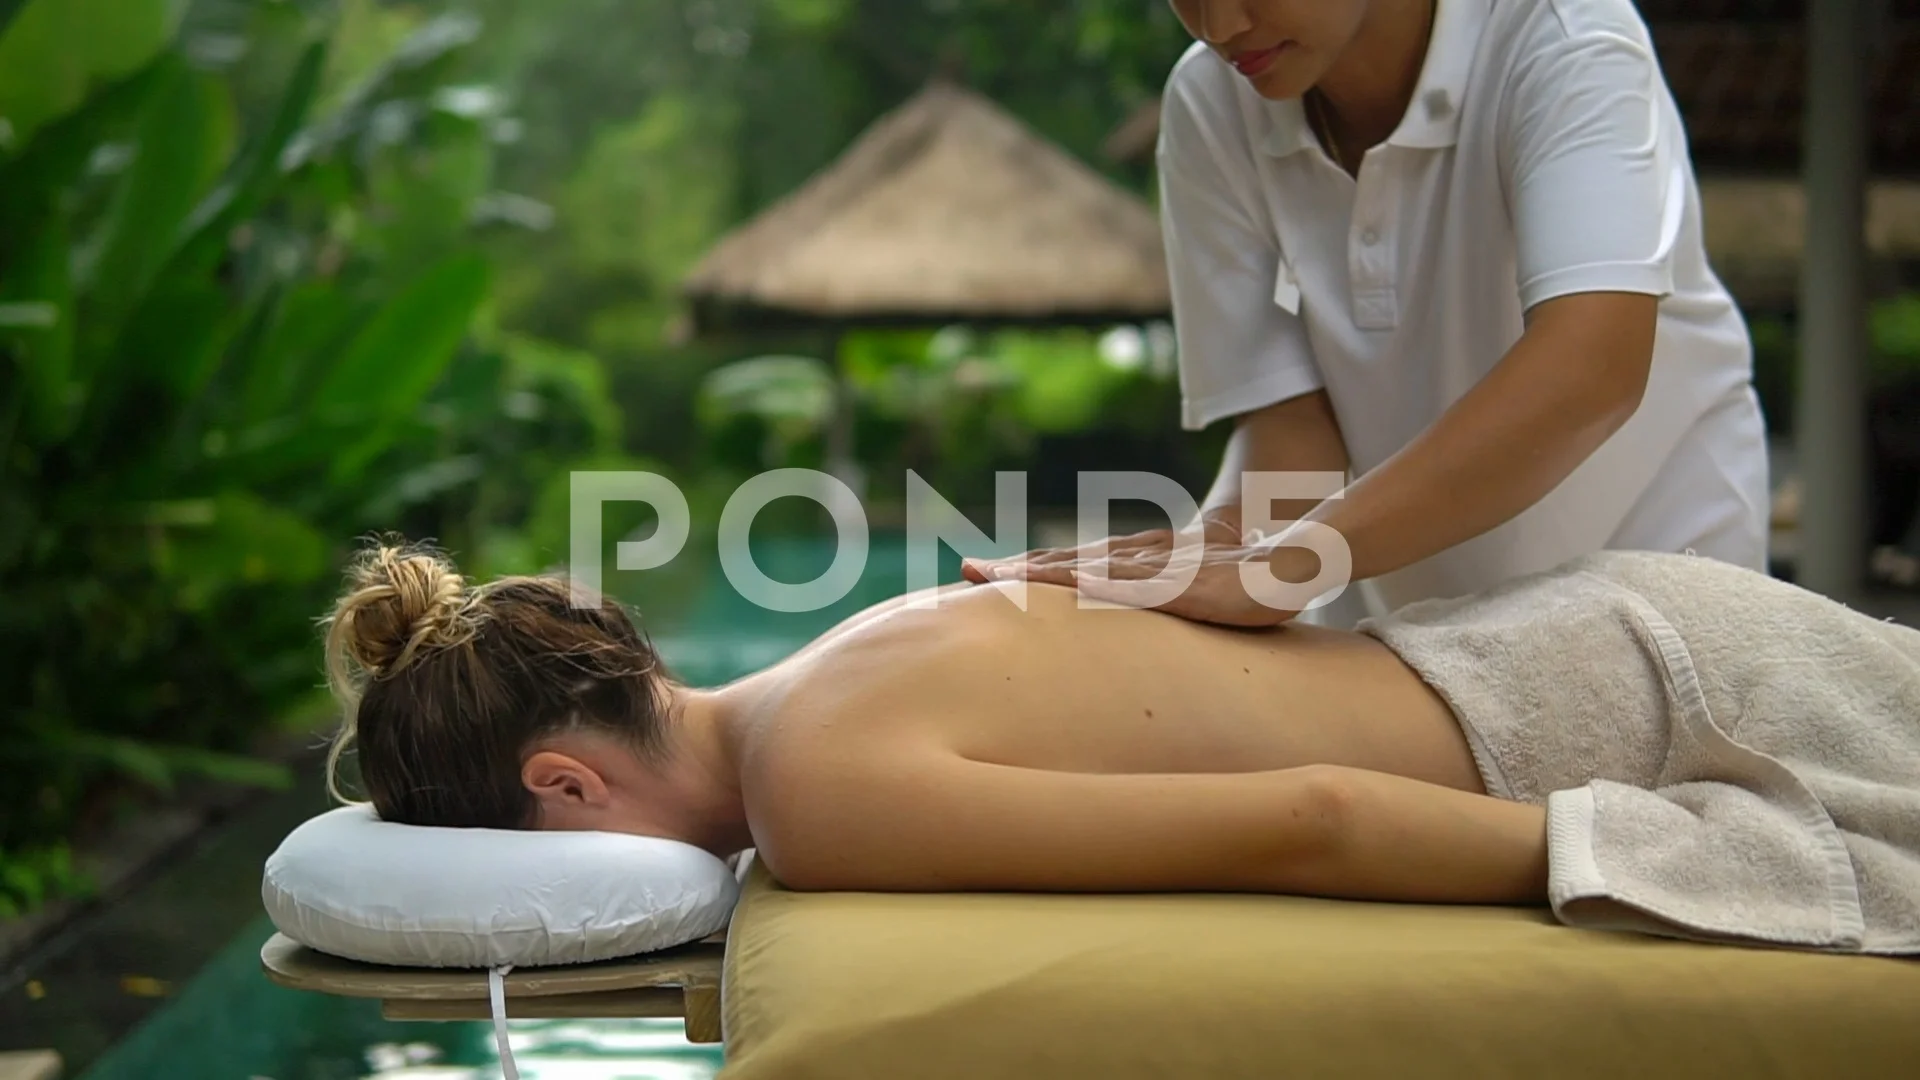 https://images.pond5.com/young-woman-receiving-back-massage-108072513_prevstill.jpeg